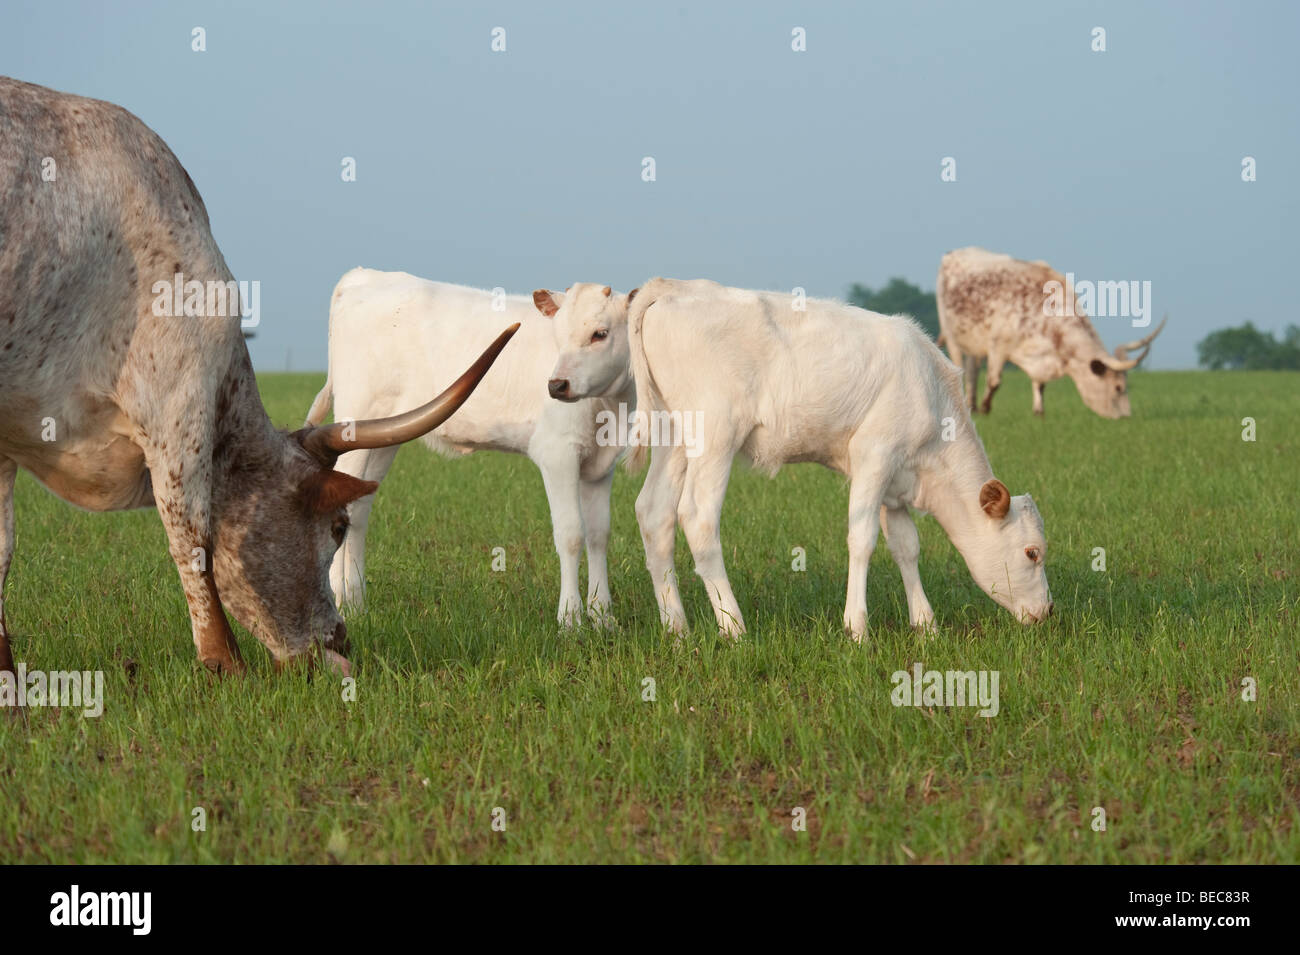 Texas Longhorn cattle calves graze near cow Stock Photo